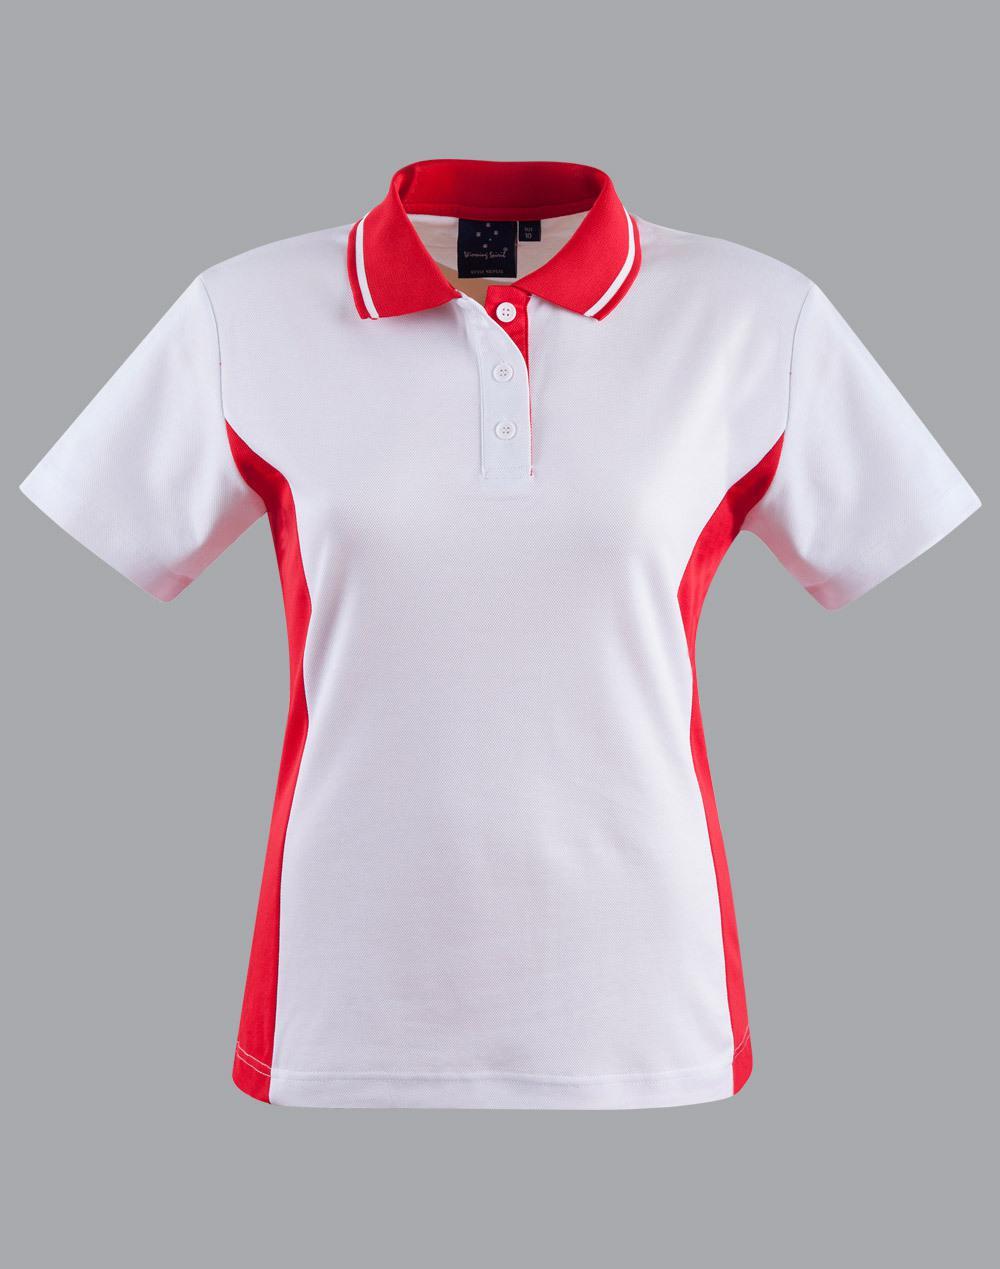 PS74 Sz 08 TEAMMATE Cotton Polyester Ladies Polo Shirt White/Red